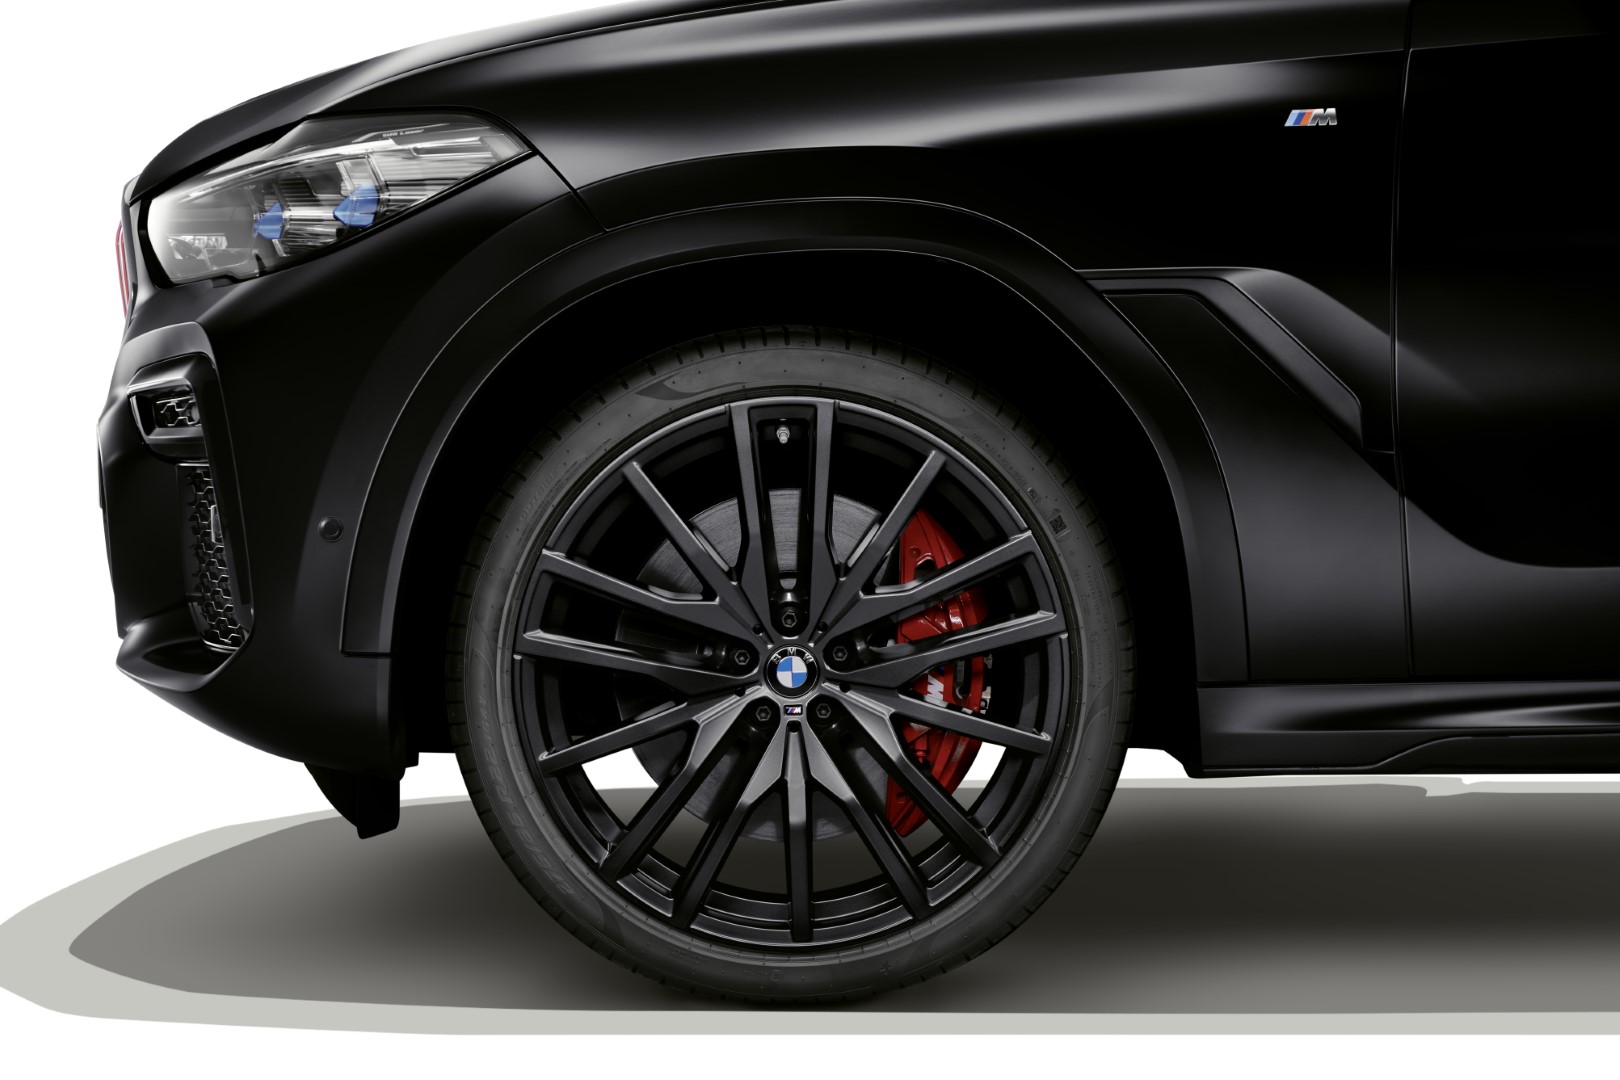 BMW X5 Black Vermilion